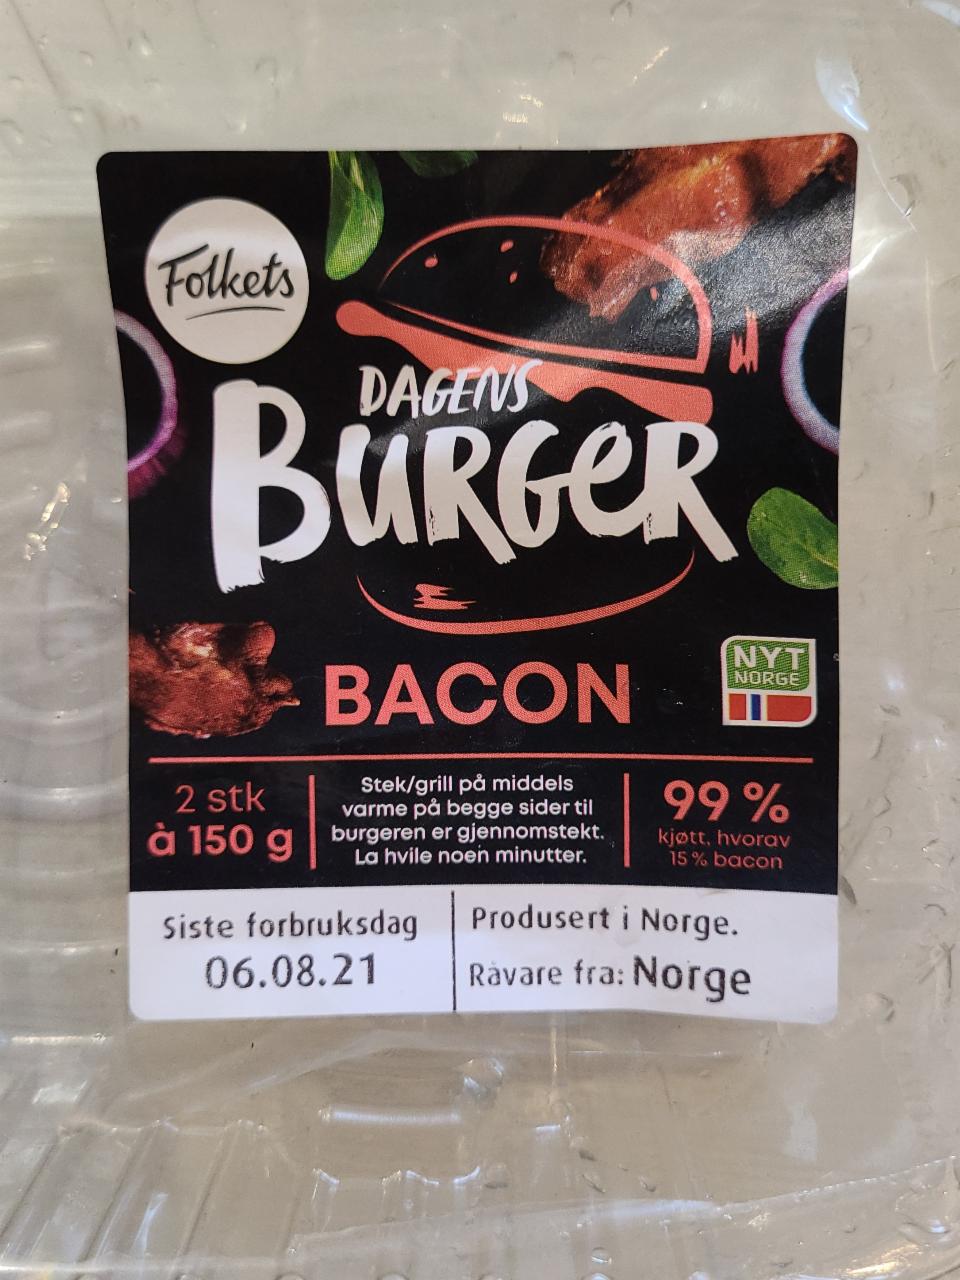 Фото - Dagens burger bacon Folkets